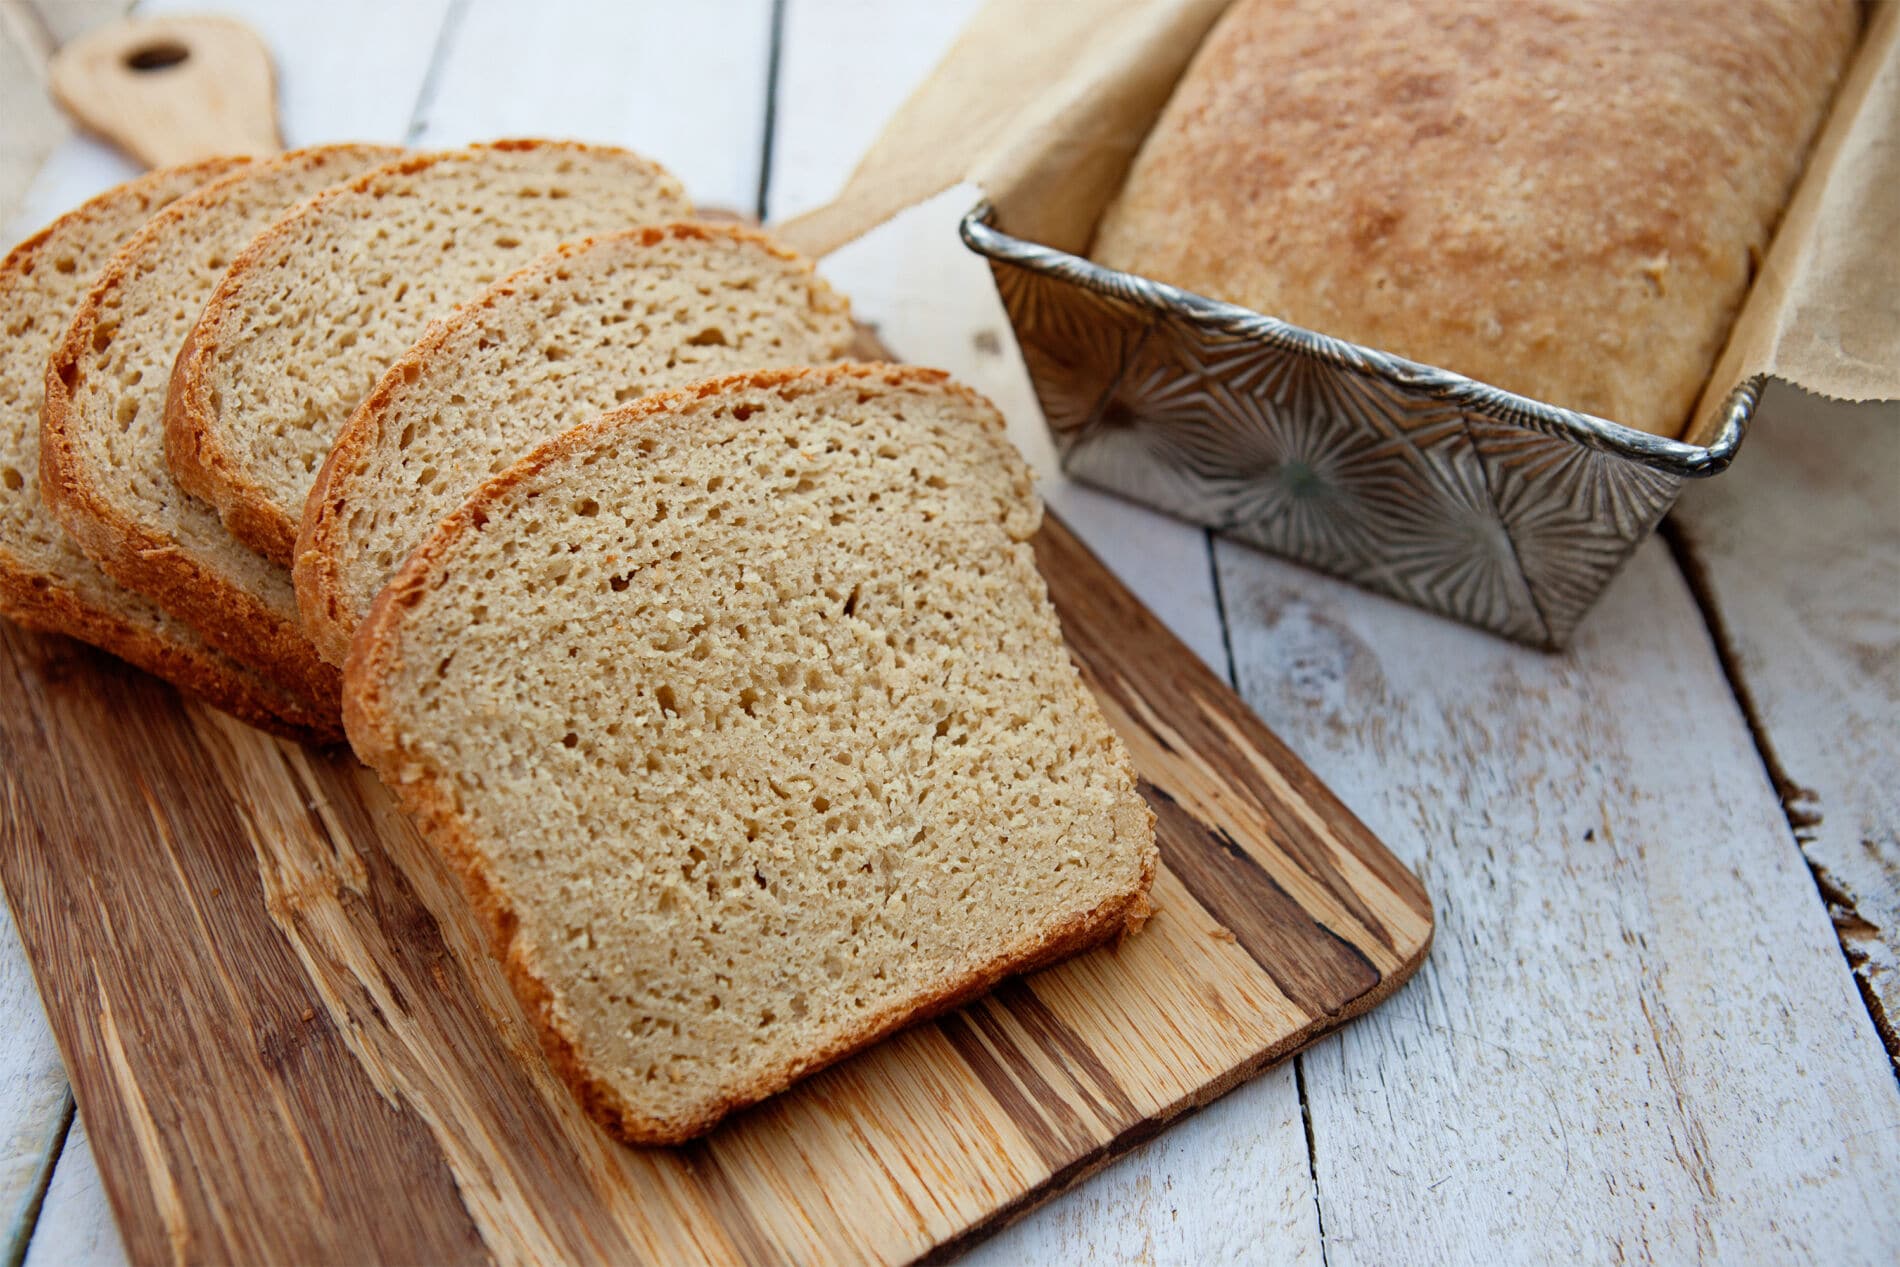 https://simplebites.net/wp-content/uploads/2013/03/Wheat-Bread-Shaina-Olmanson-foodformyfamily.jpg